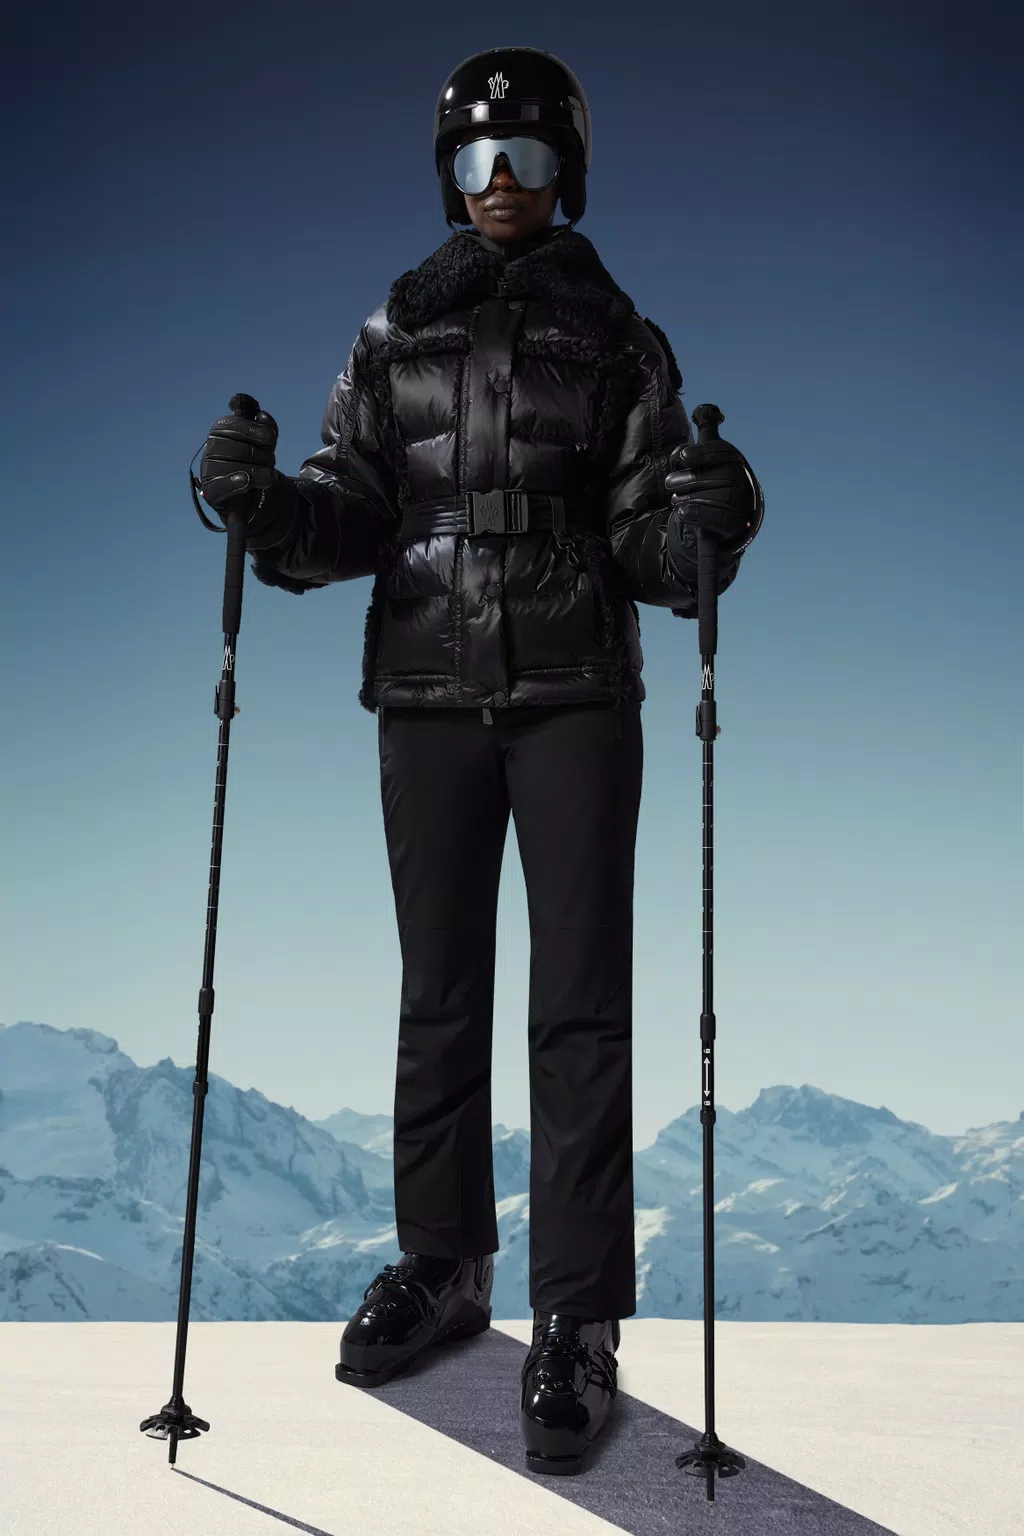 Pantalon de ski Femmes Noir Moncler 1